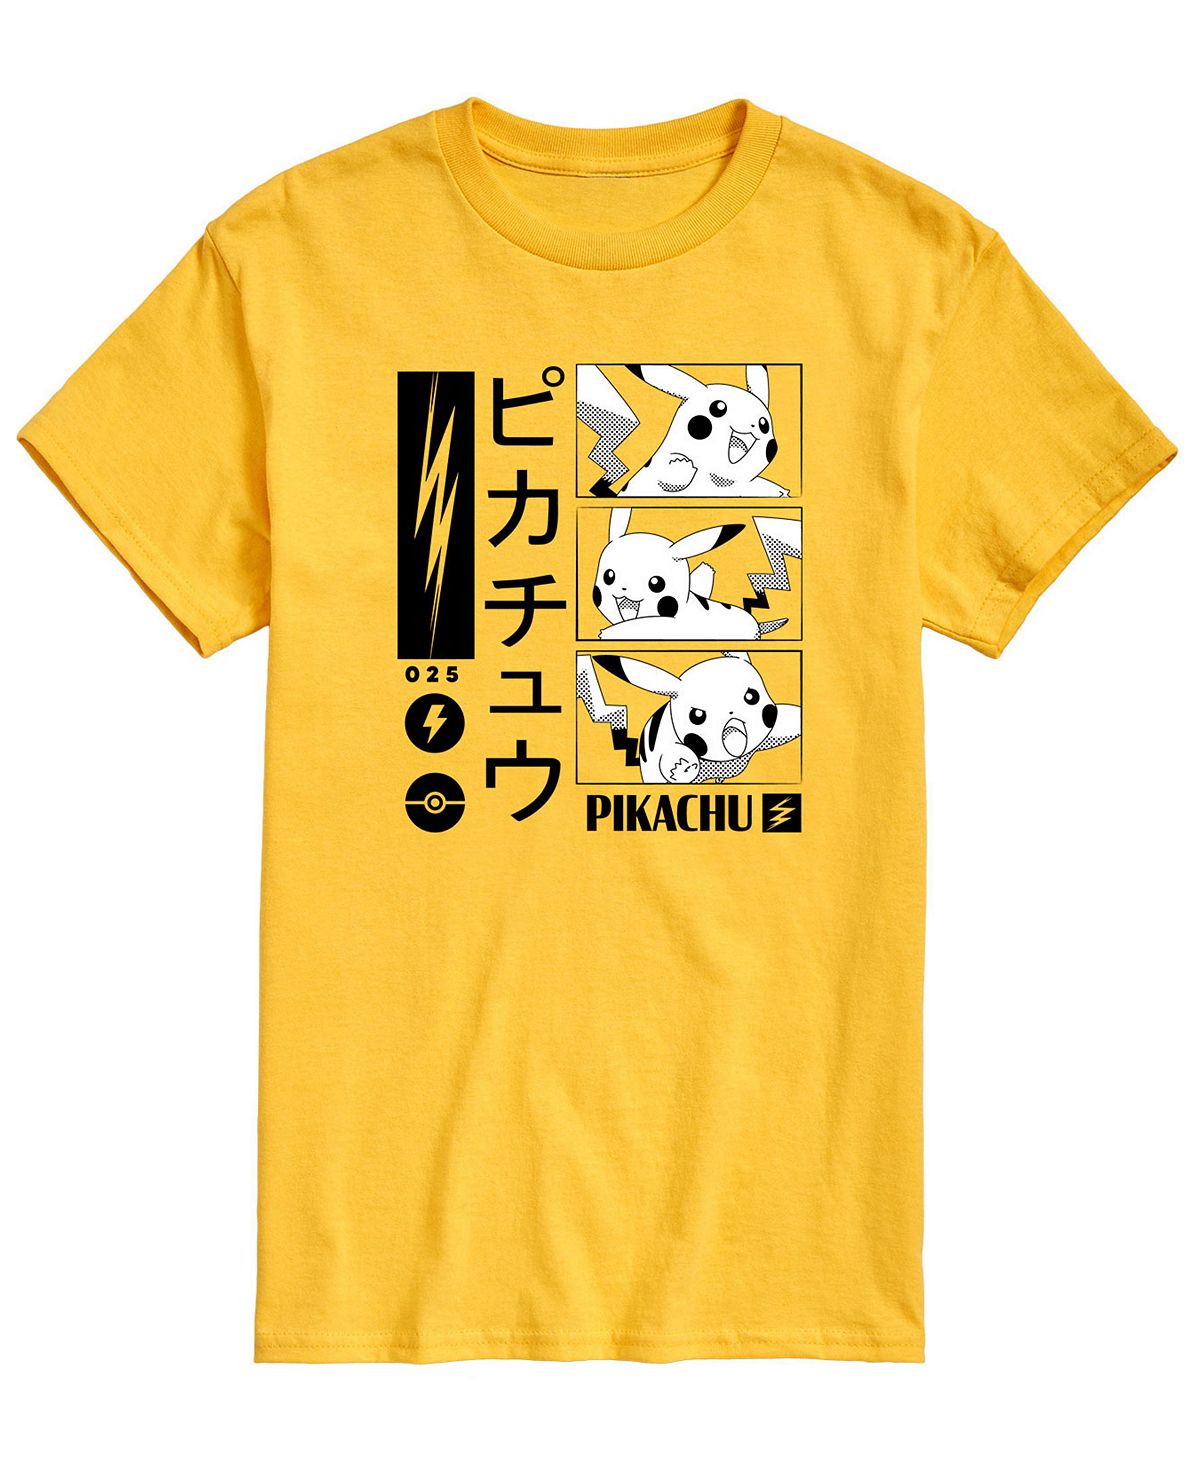 Мужская футболка с рисунком Pokemon Kanji Pika AIRWAVES мужская футболка с длинным рукавом pokemon pika pika pika airwaves черный